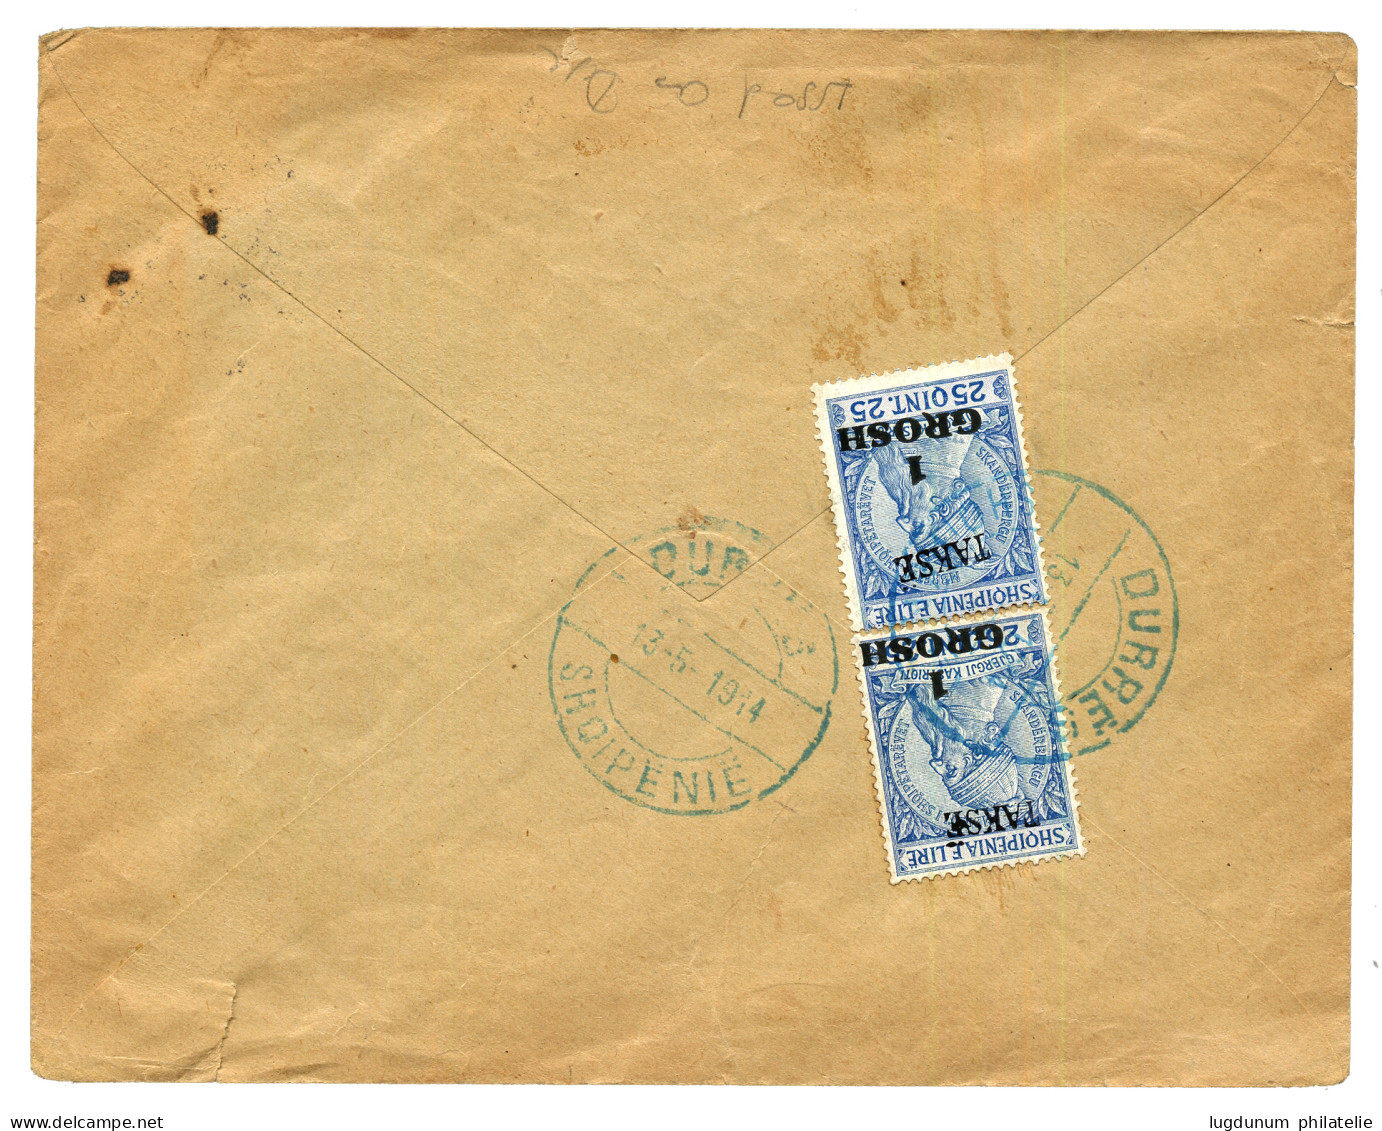 ALBANIA : 1914 AUSTRIA 1h Canc. TRIESTE + "T" Tax Marking On Envelope (PRINTED MATTER Rate) On Envelope To DURAZZO Taxed - Albanie